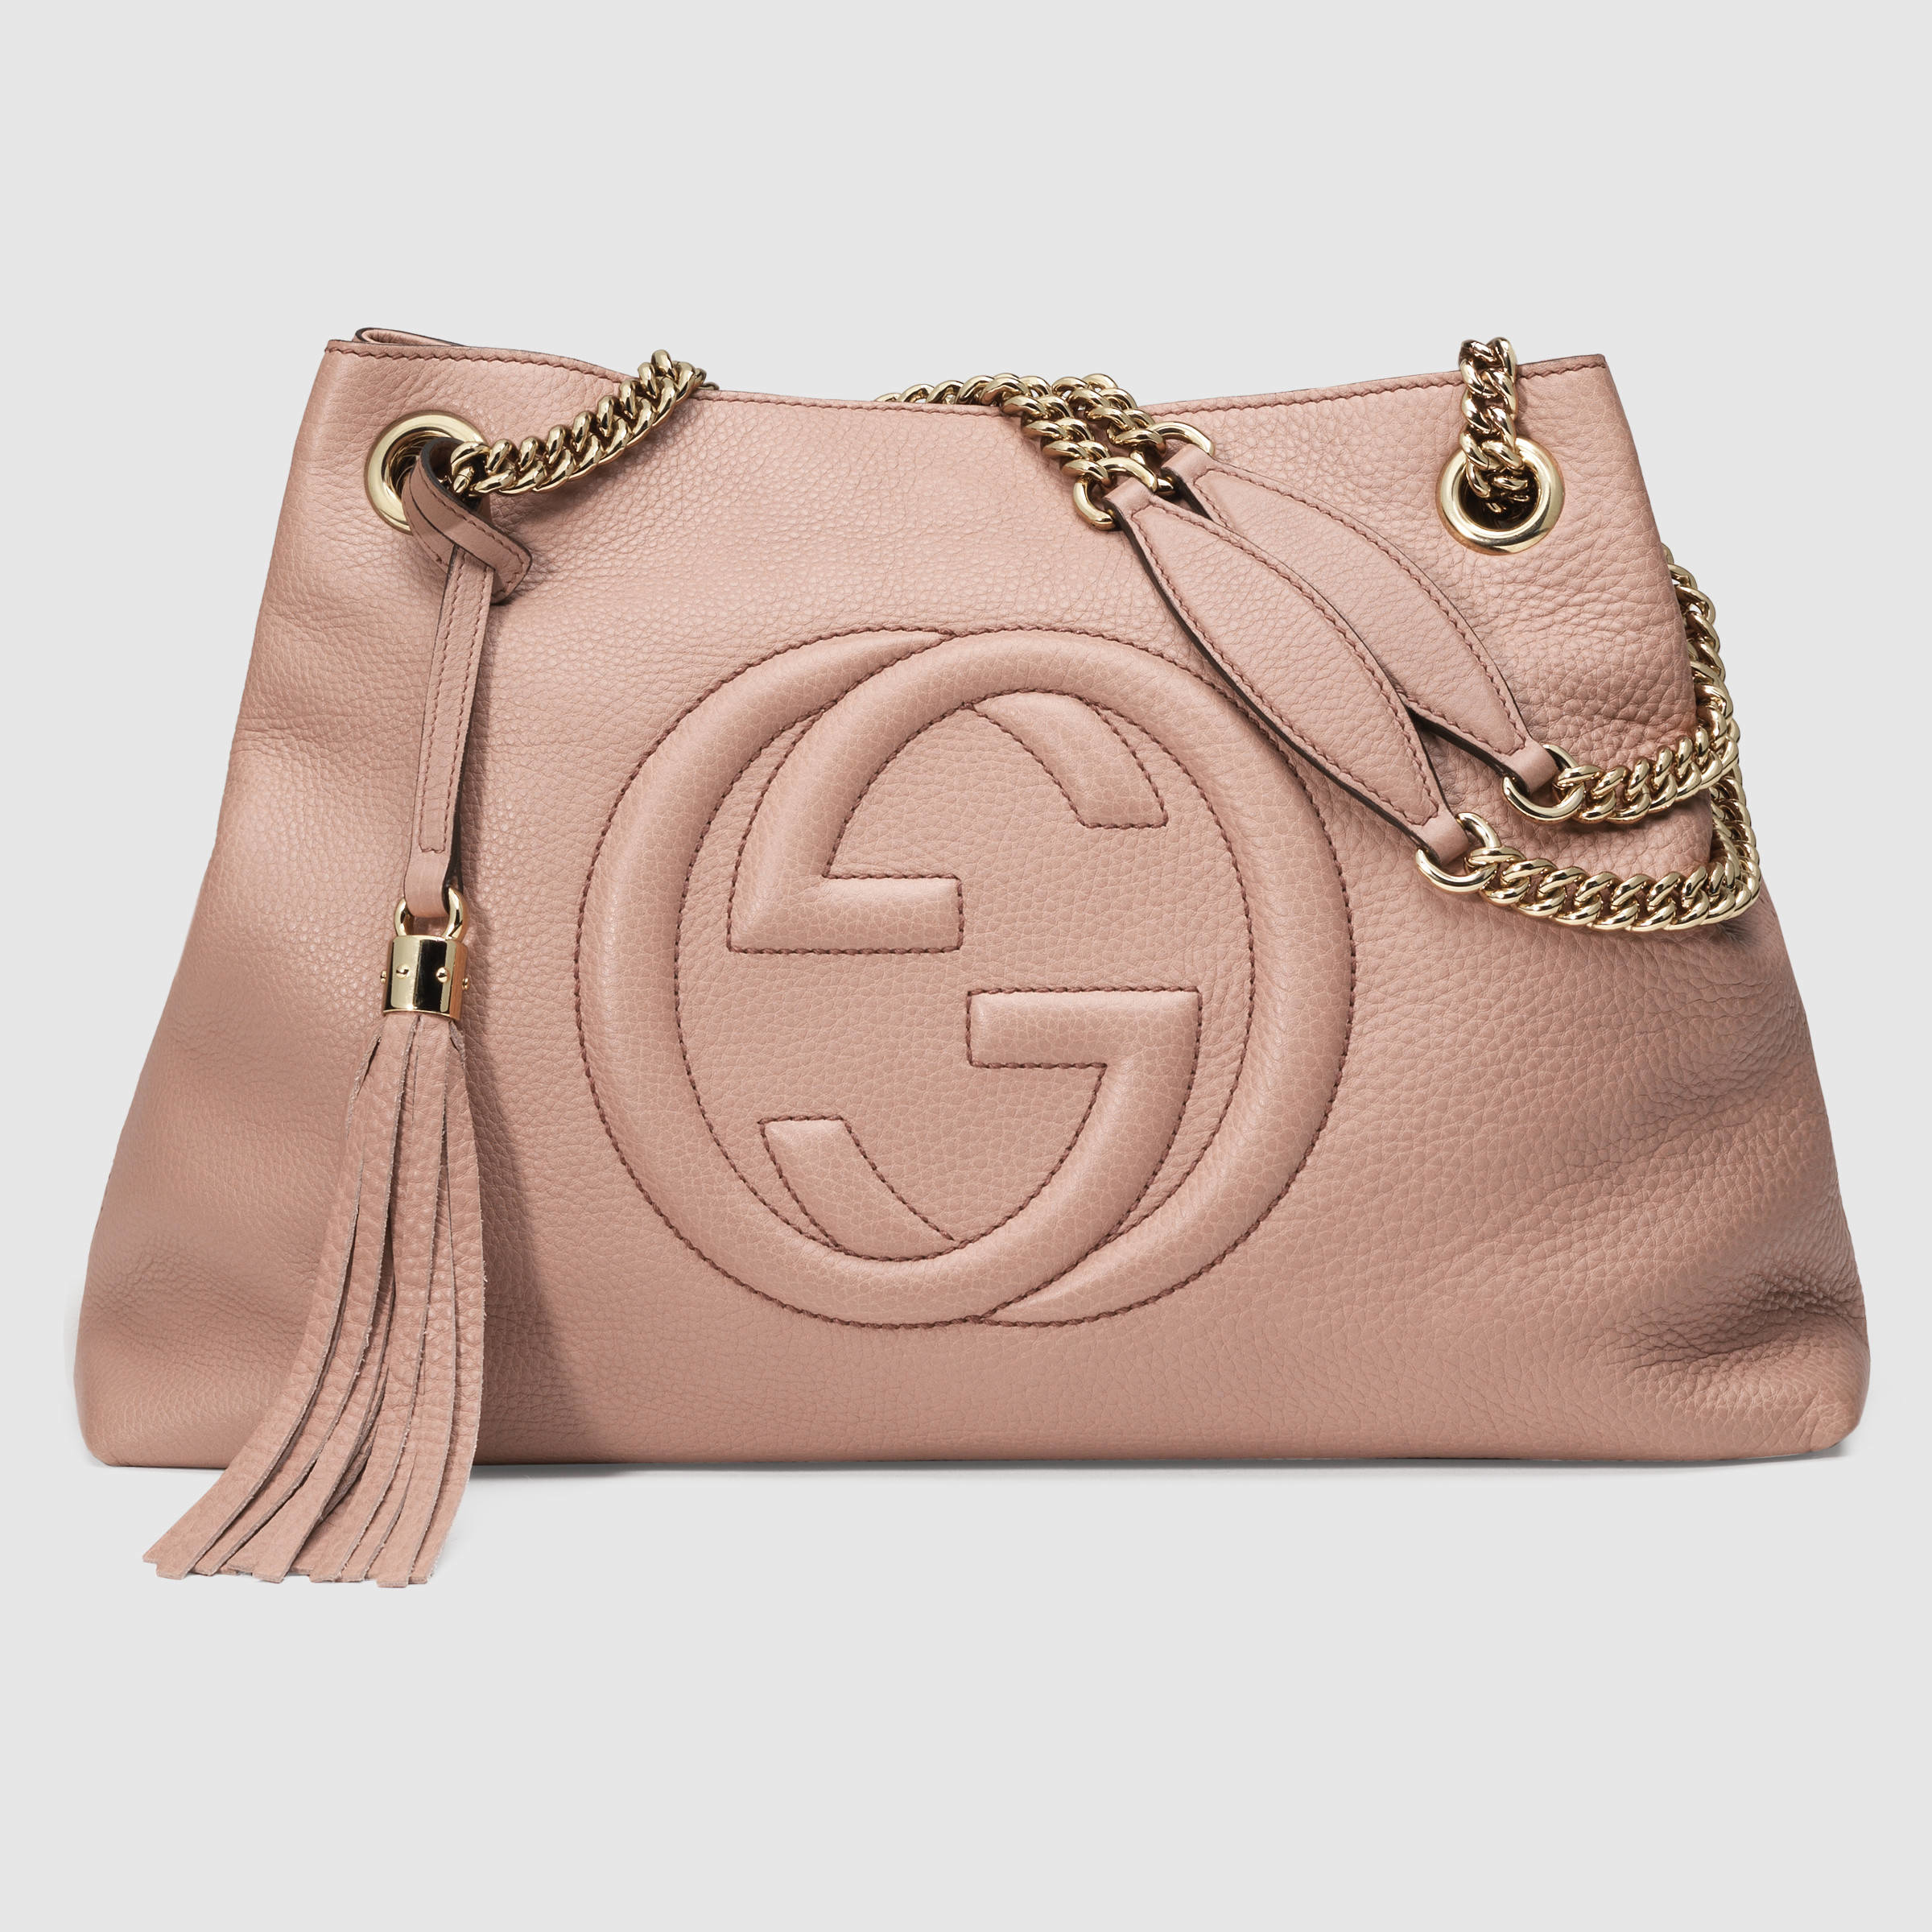 Gucci Soho Leather Shoulder Bag In Light Pink Leather Pink Lyst